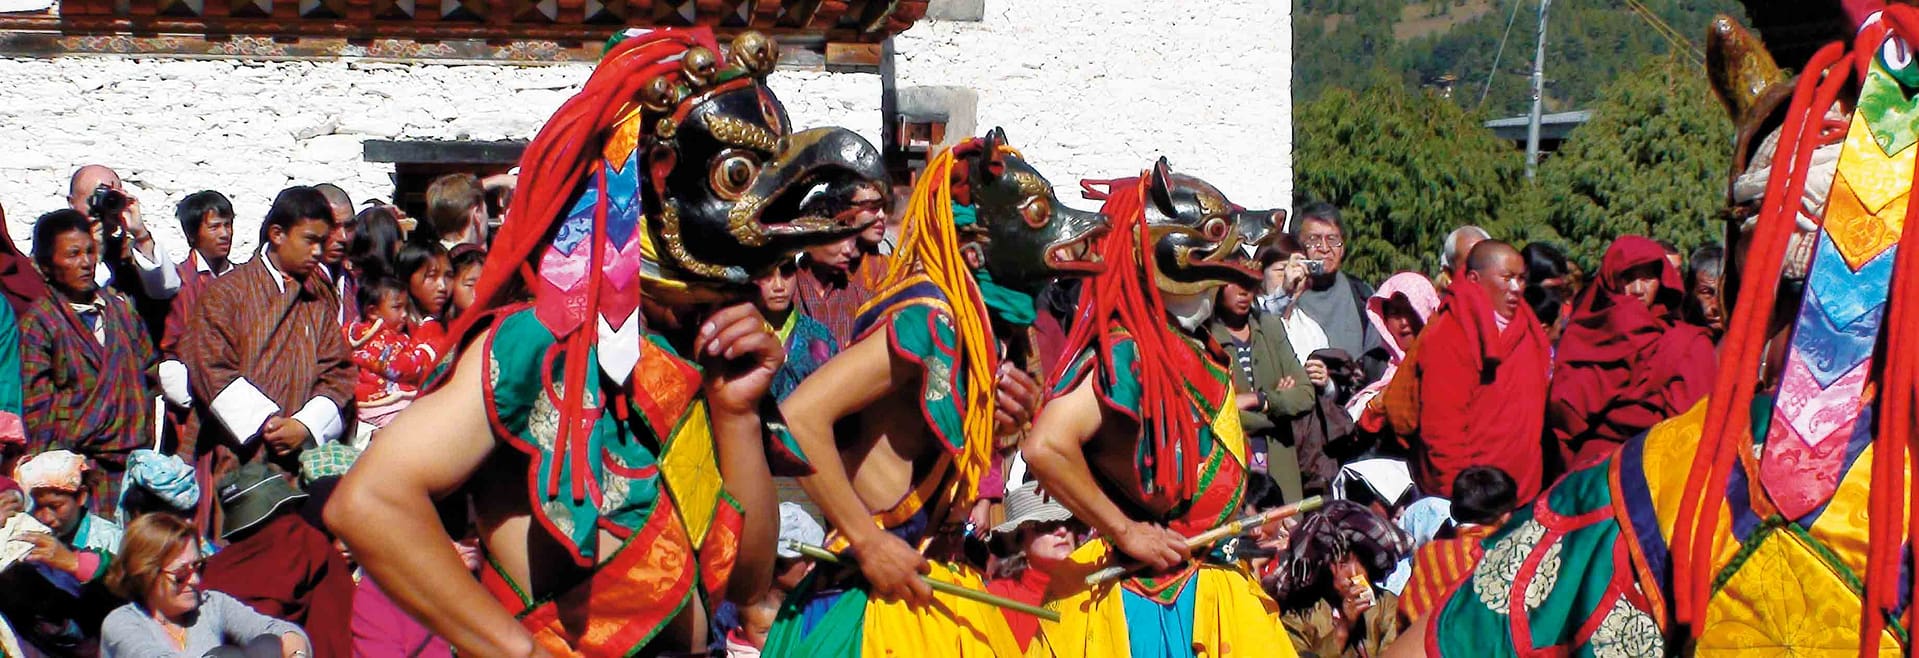 Farbenfrohe Feste in Bhutan